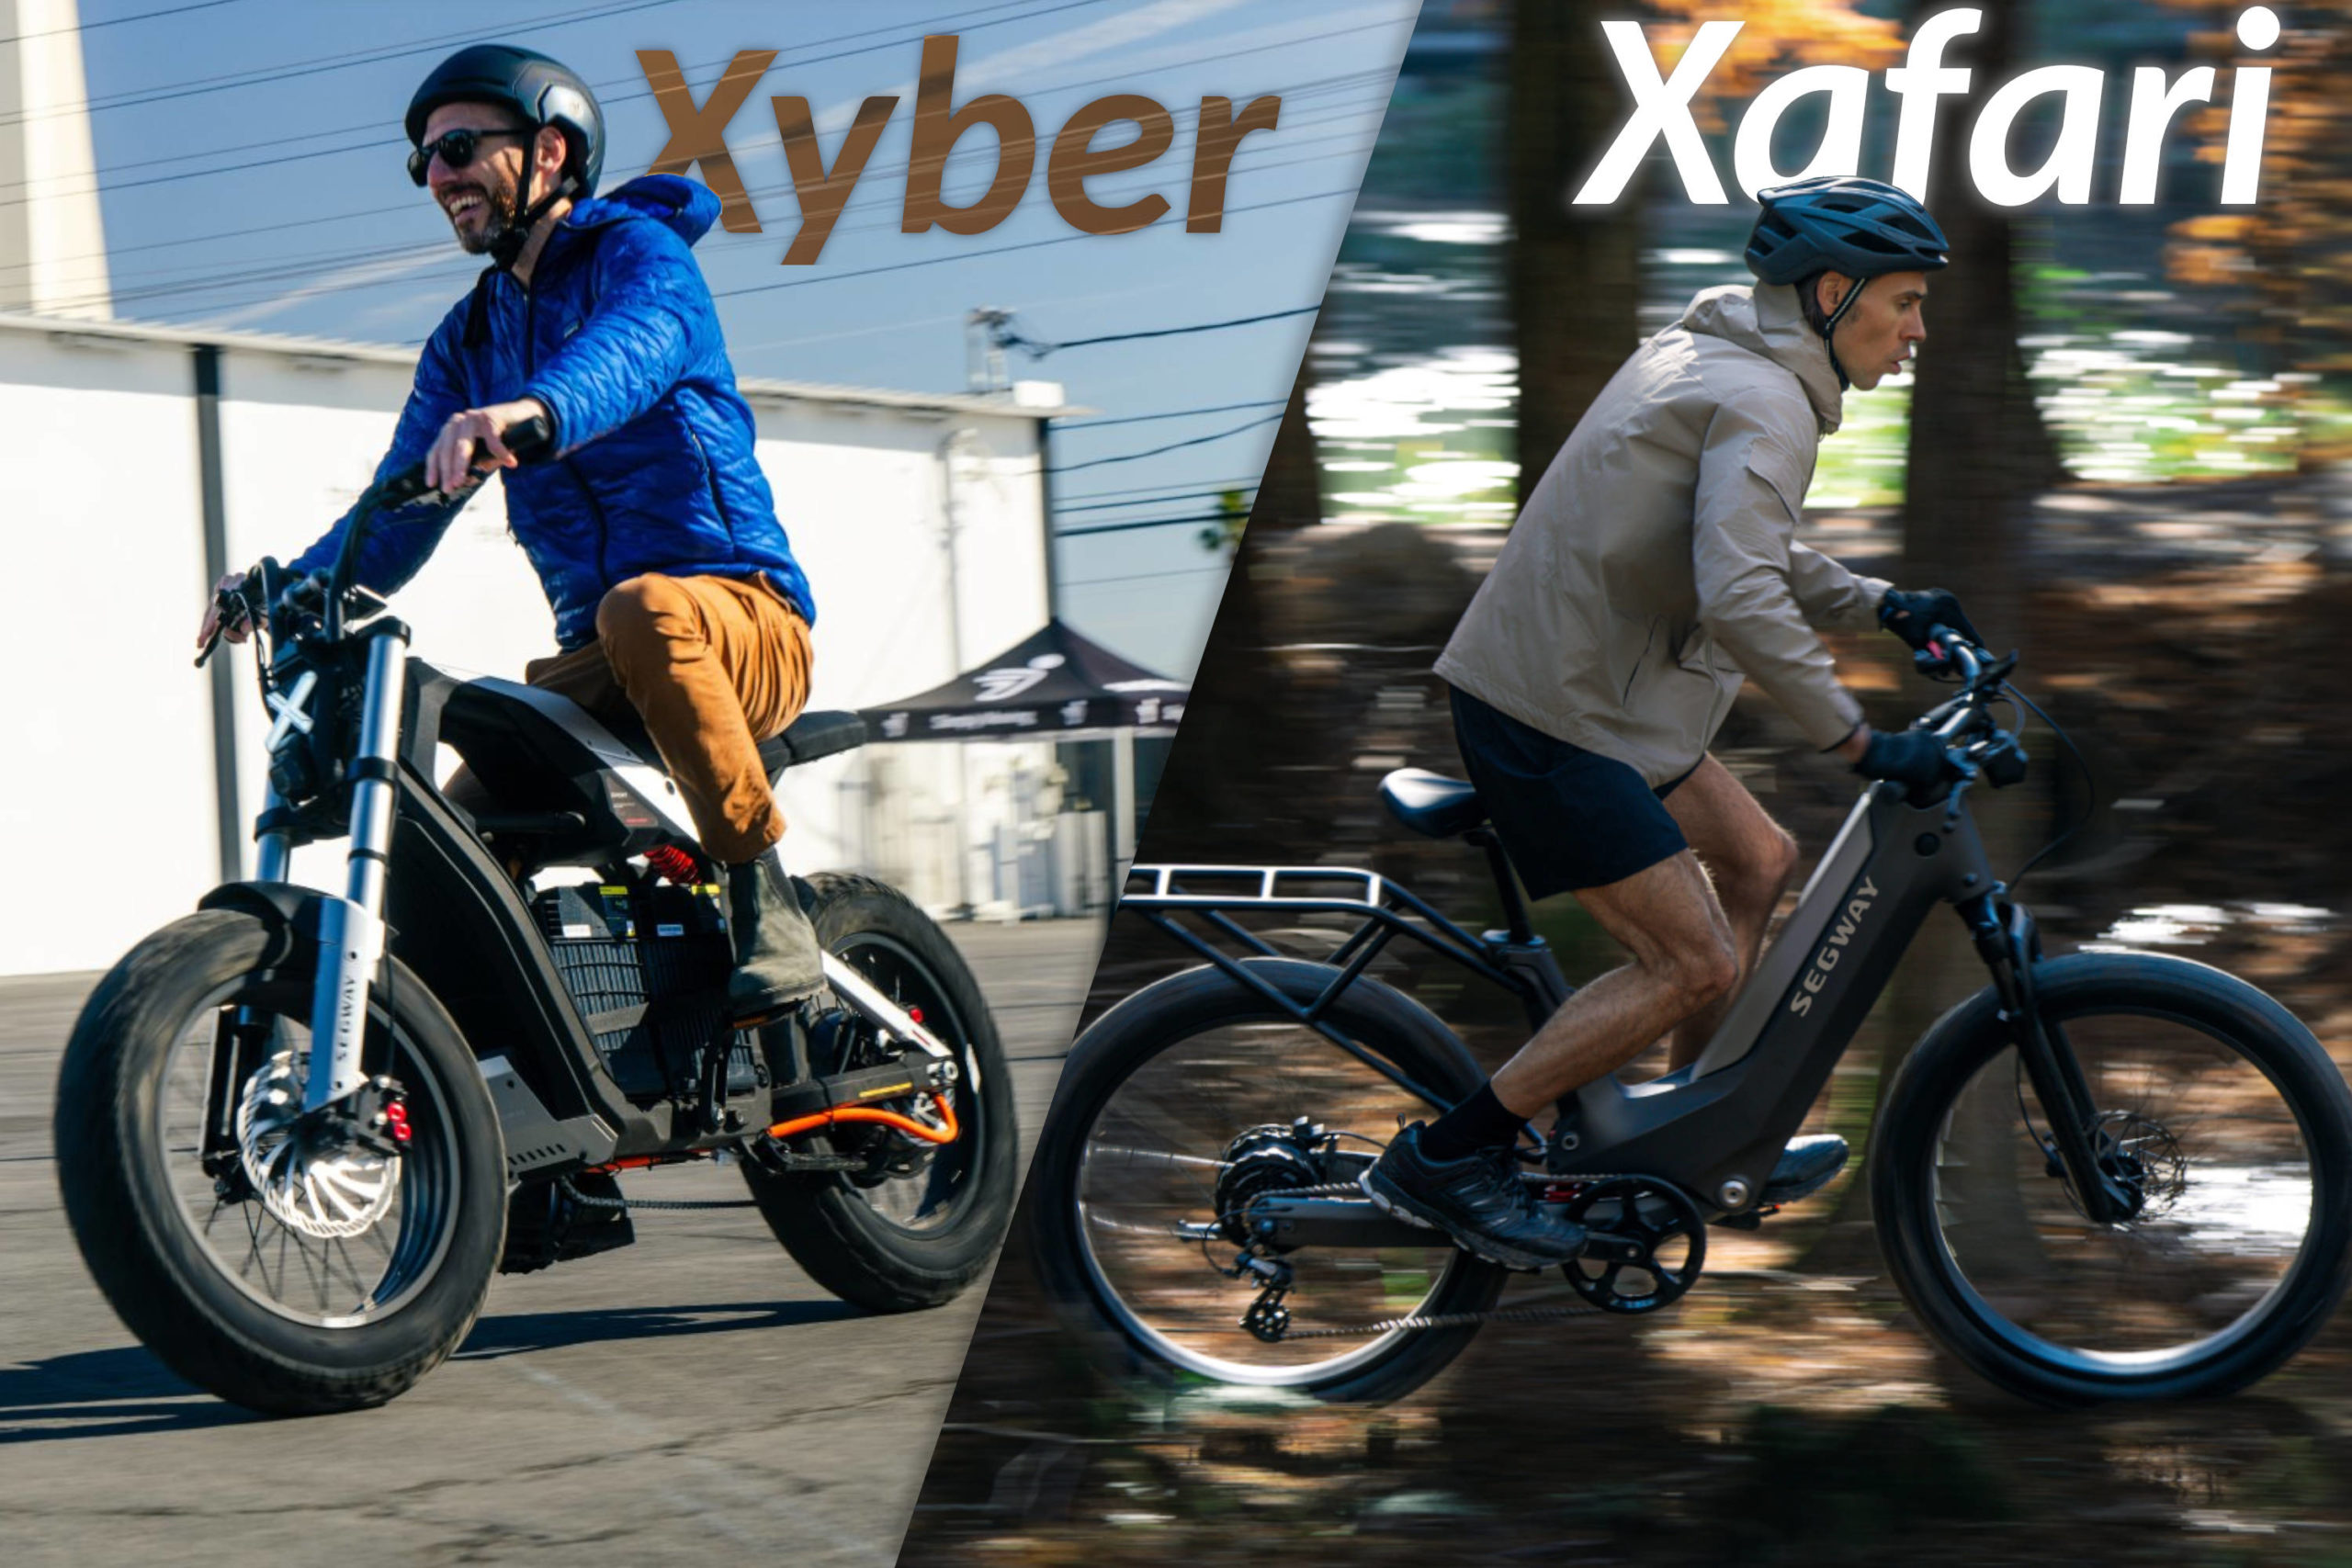 Segway Xyber Electric Scrambler Debuts as ‘The Silent Beast’ Alongside the Practical Xafari Step-Through ‘Trekking’ Commuter E-Bike